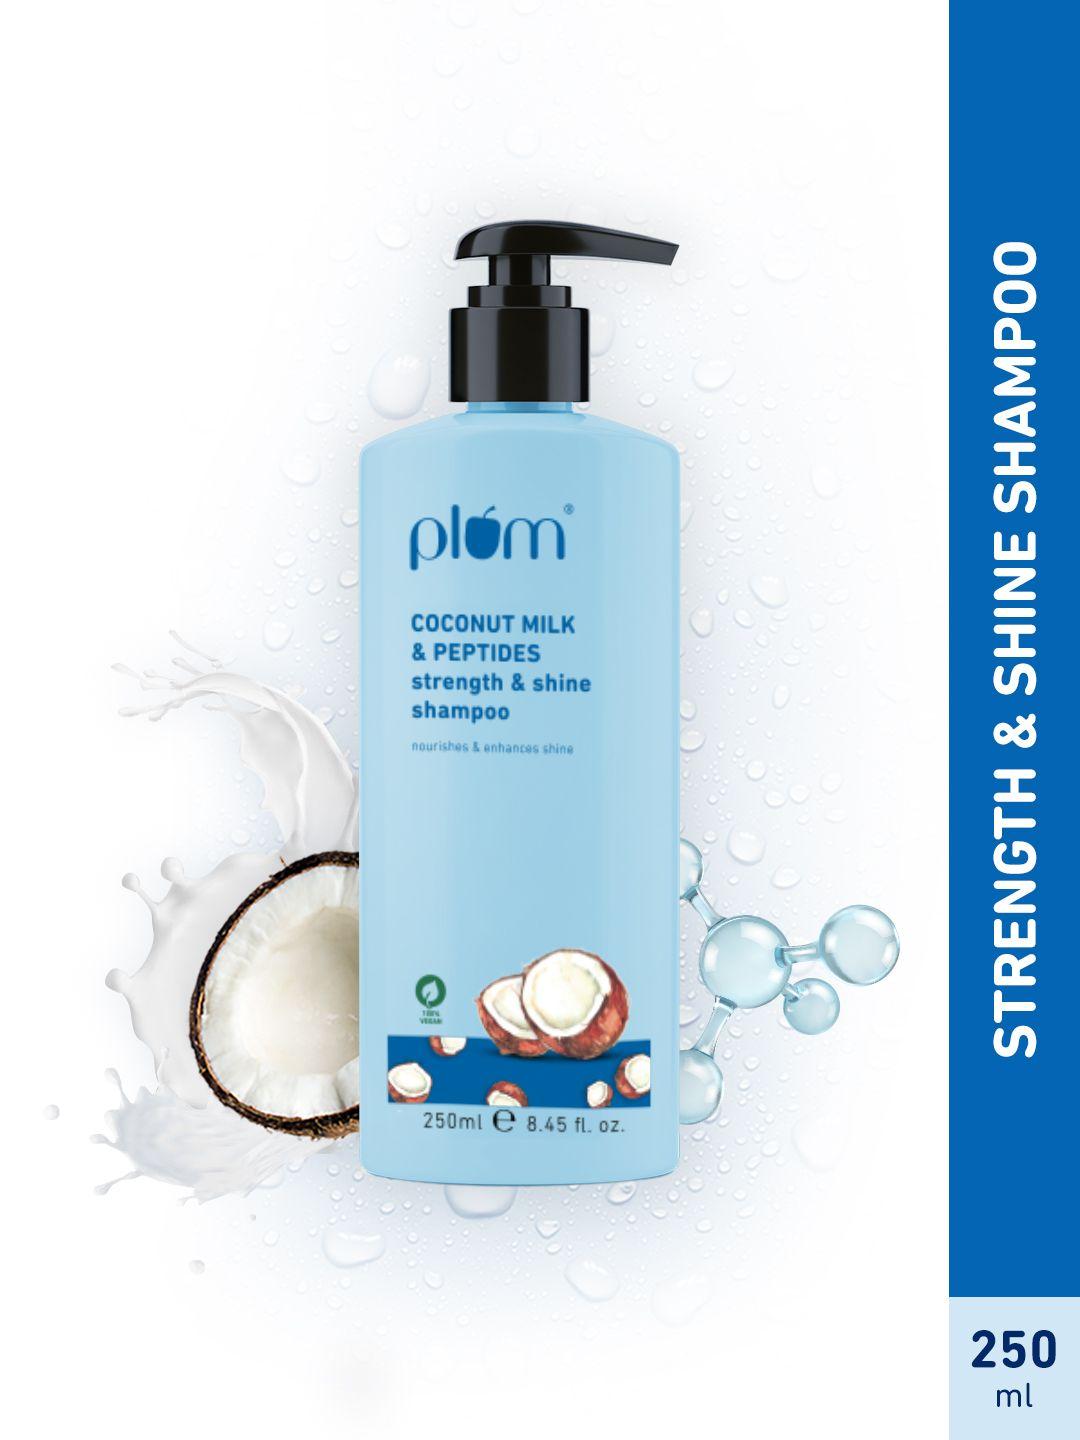 plum-coconut-milk-&-peptides-strength-&-shine-shampoo---250ml